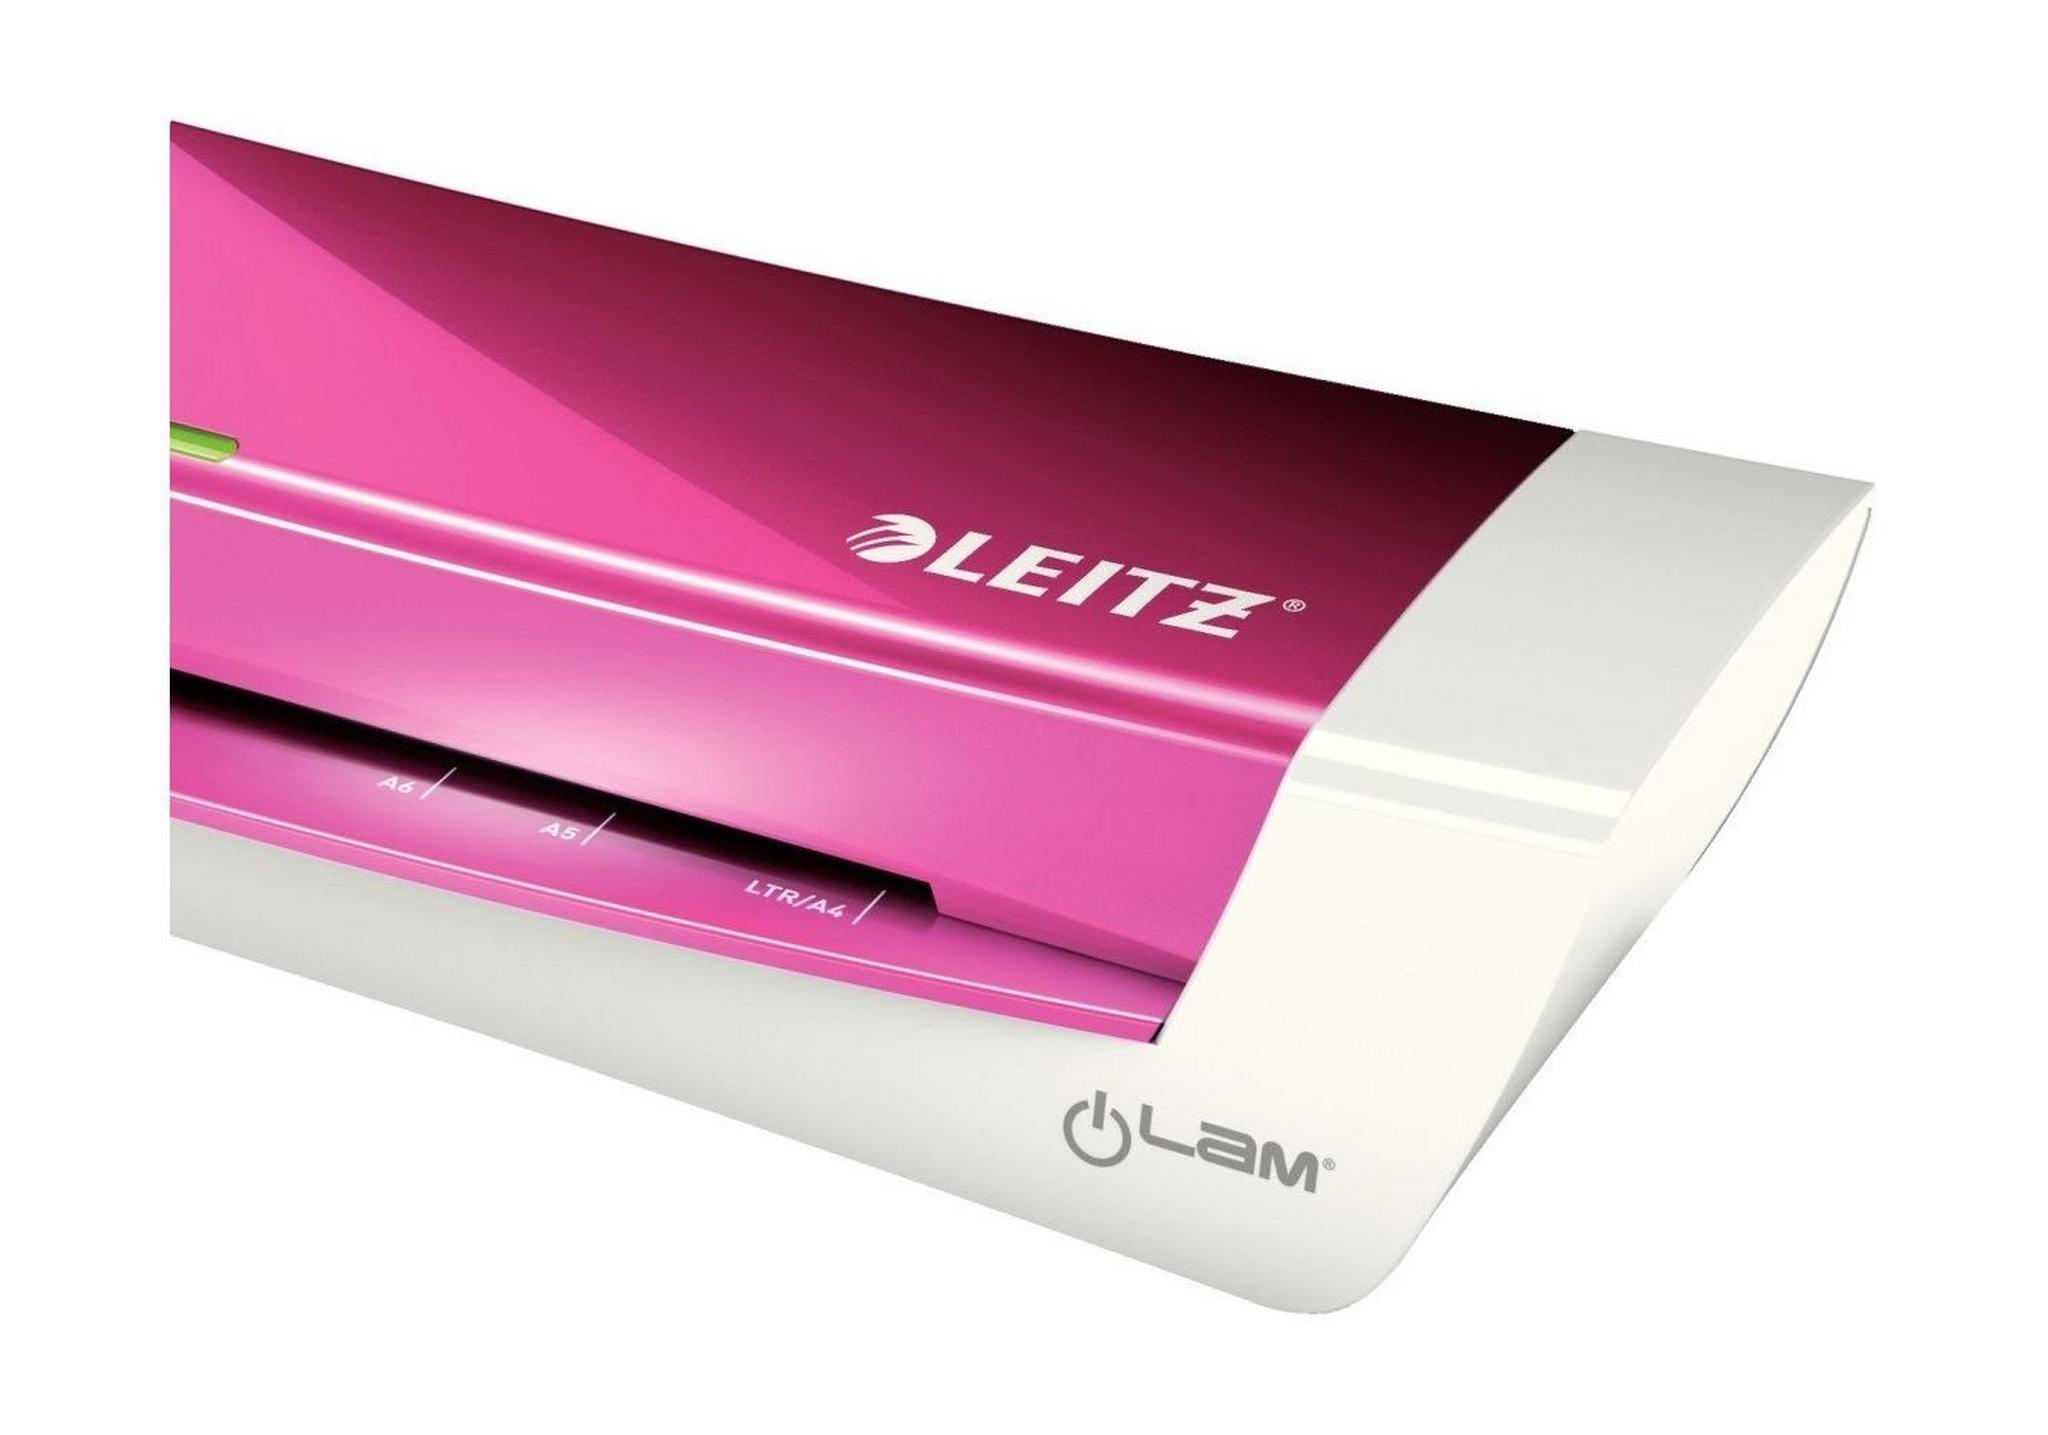 Leitz iLam A4 Laminator - Pink